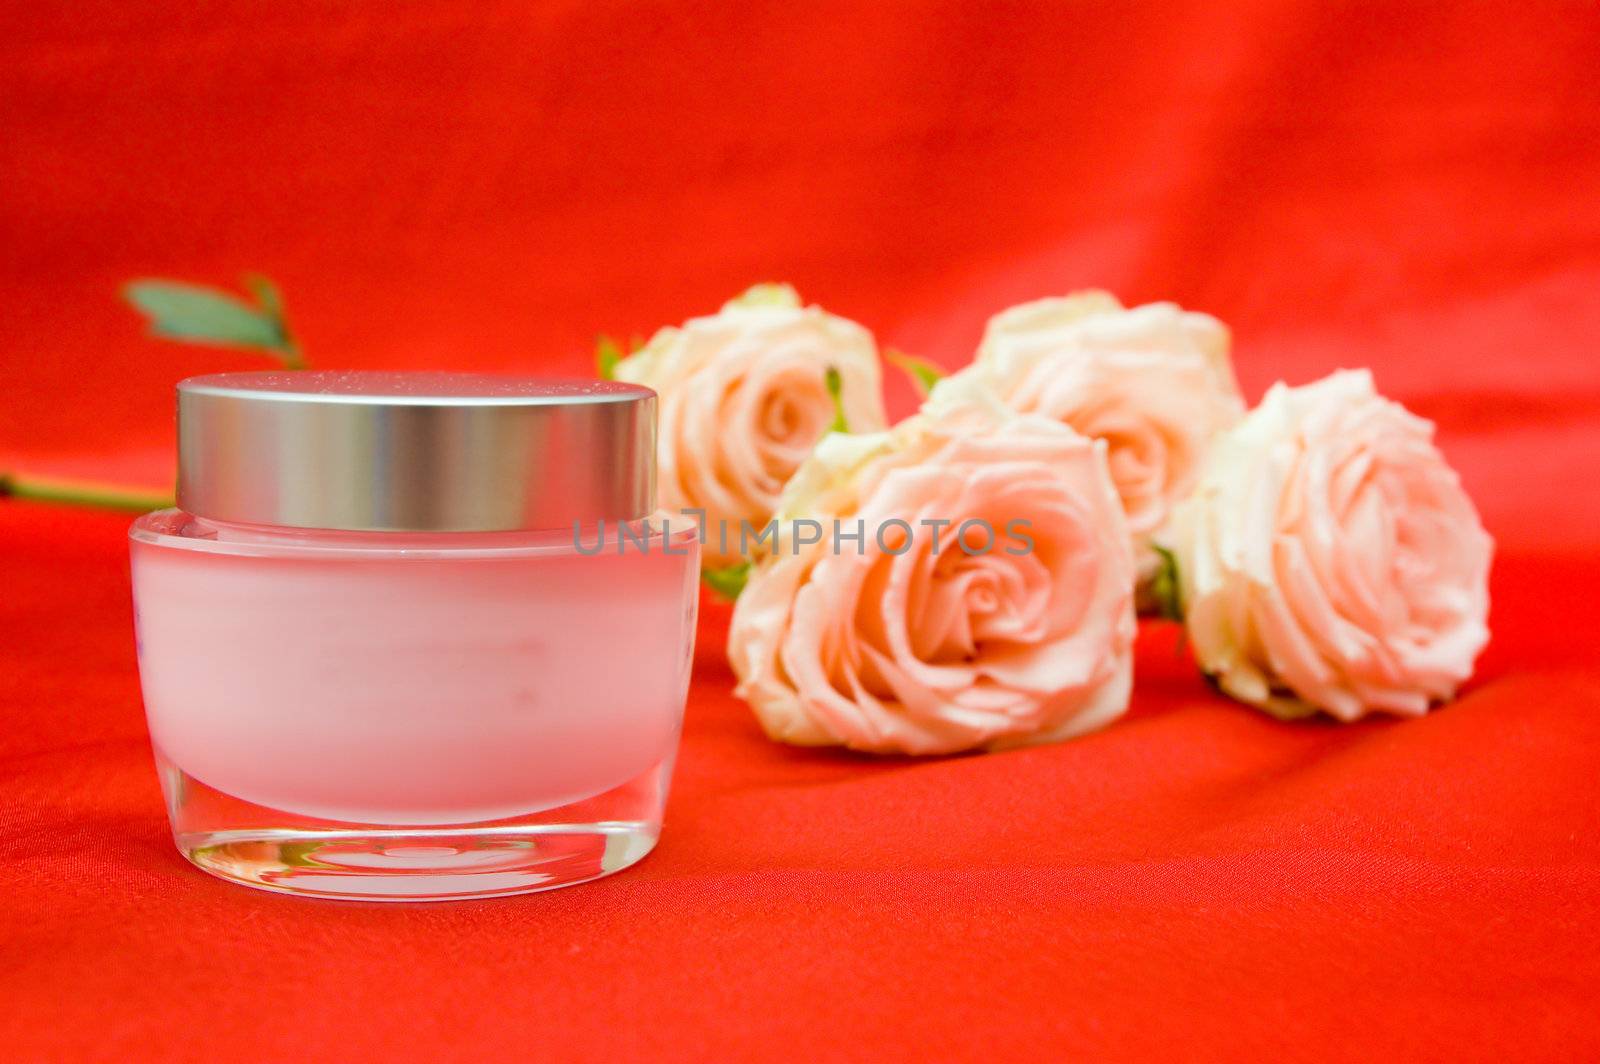 moisturizer cream and rose by semenovp